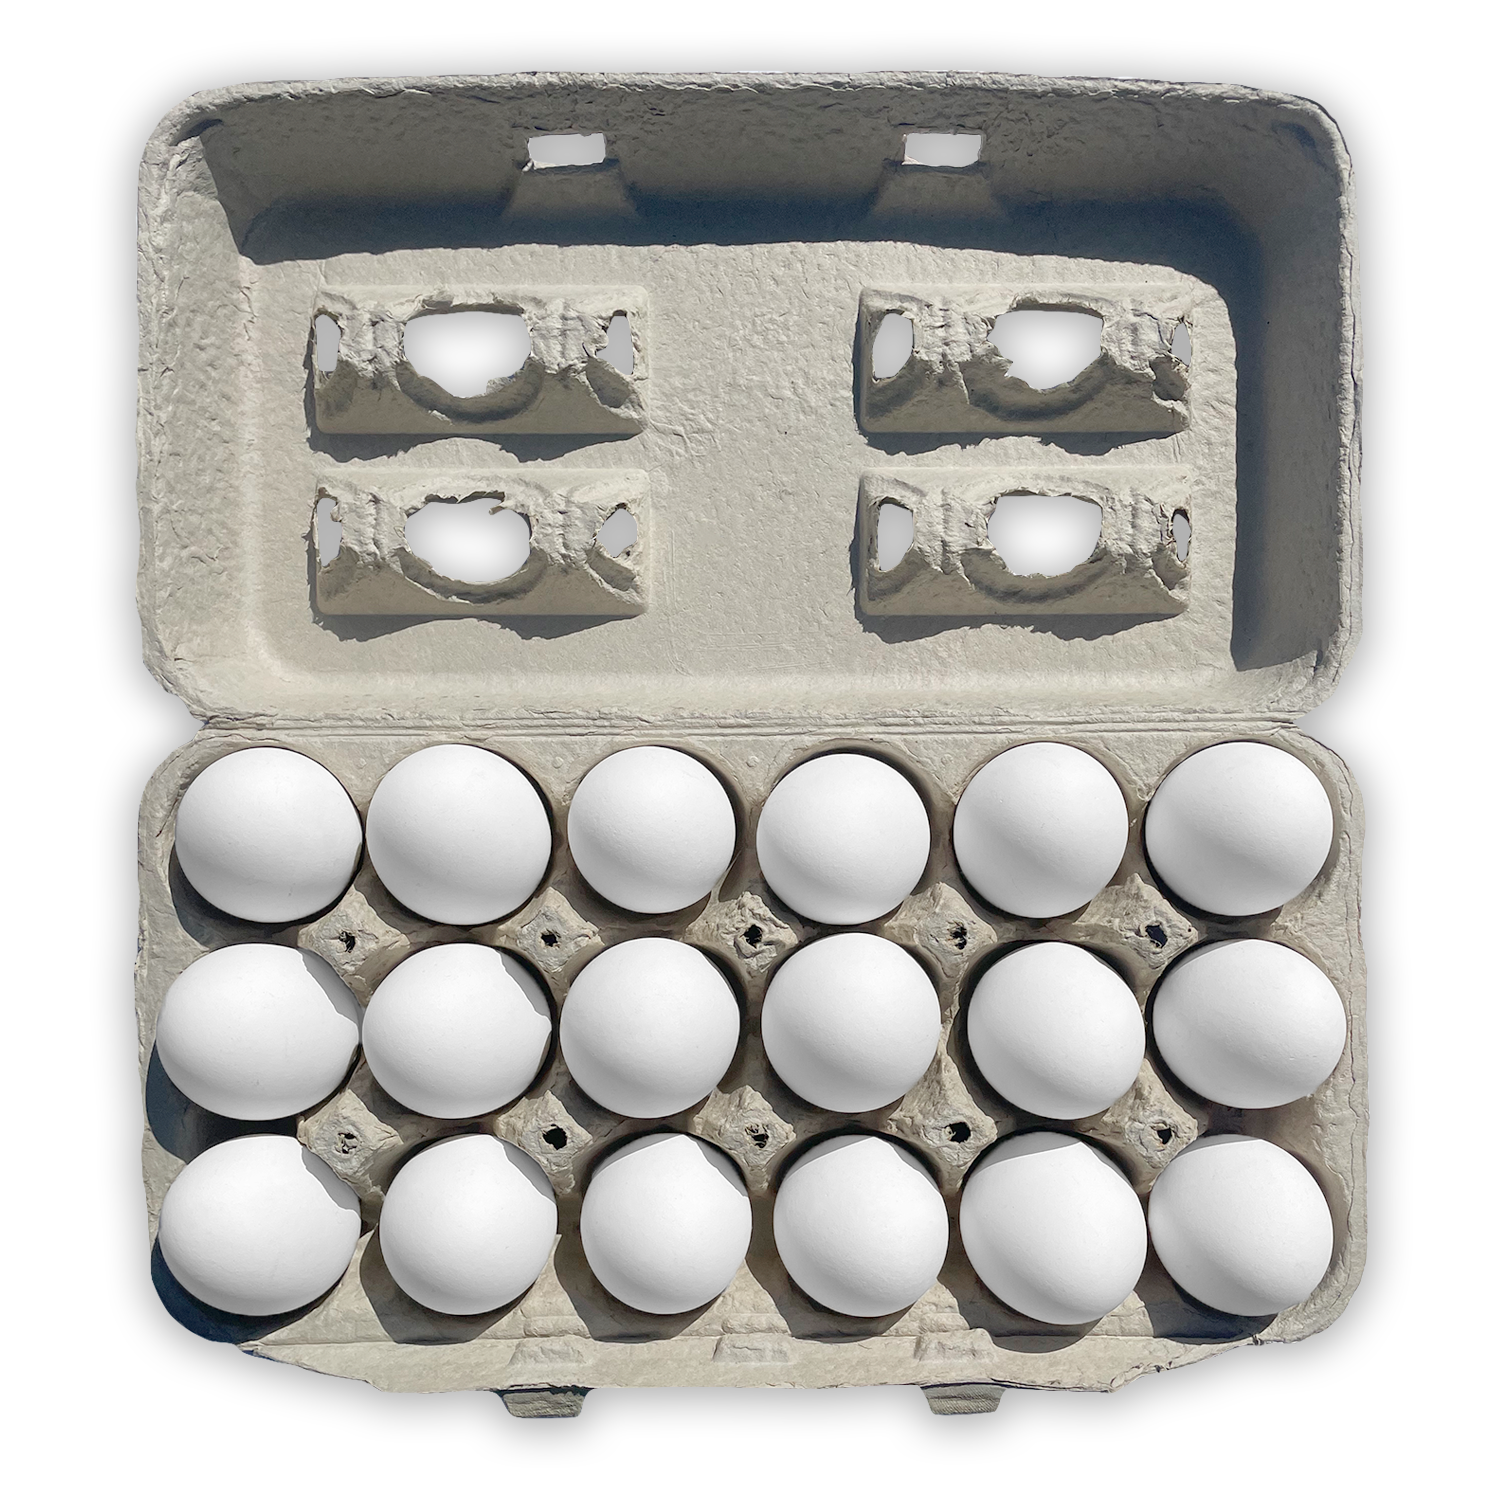  50 Pack Plastic Egg Cartons Cheap Bulk 12 Count Clear